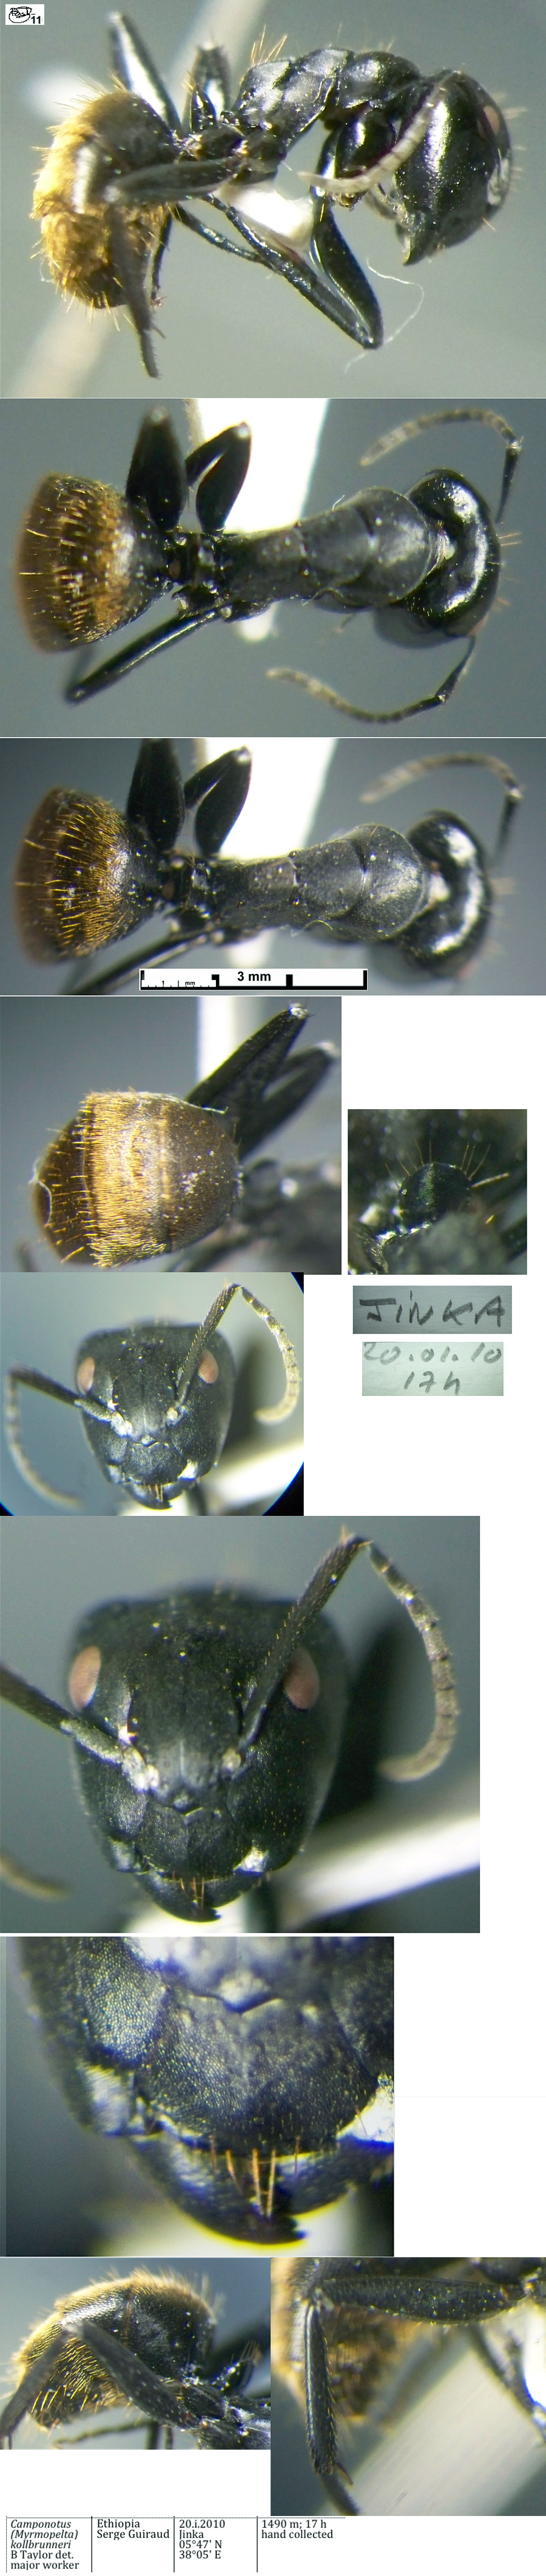 {Camponotus (Myrmopelta) kollbrunneri major}